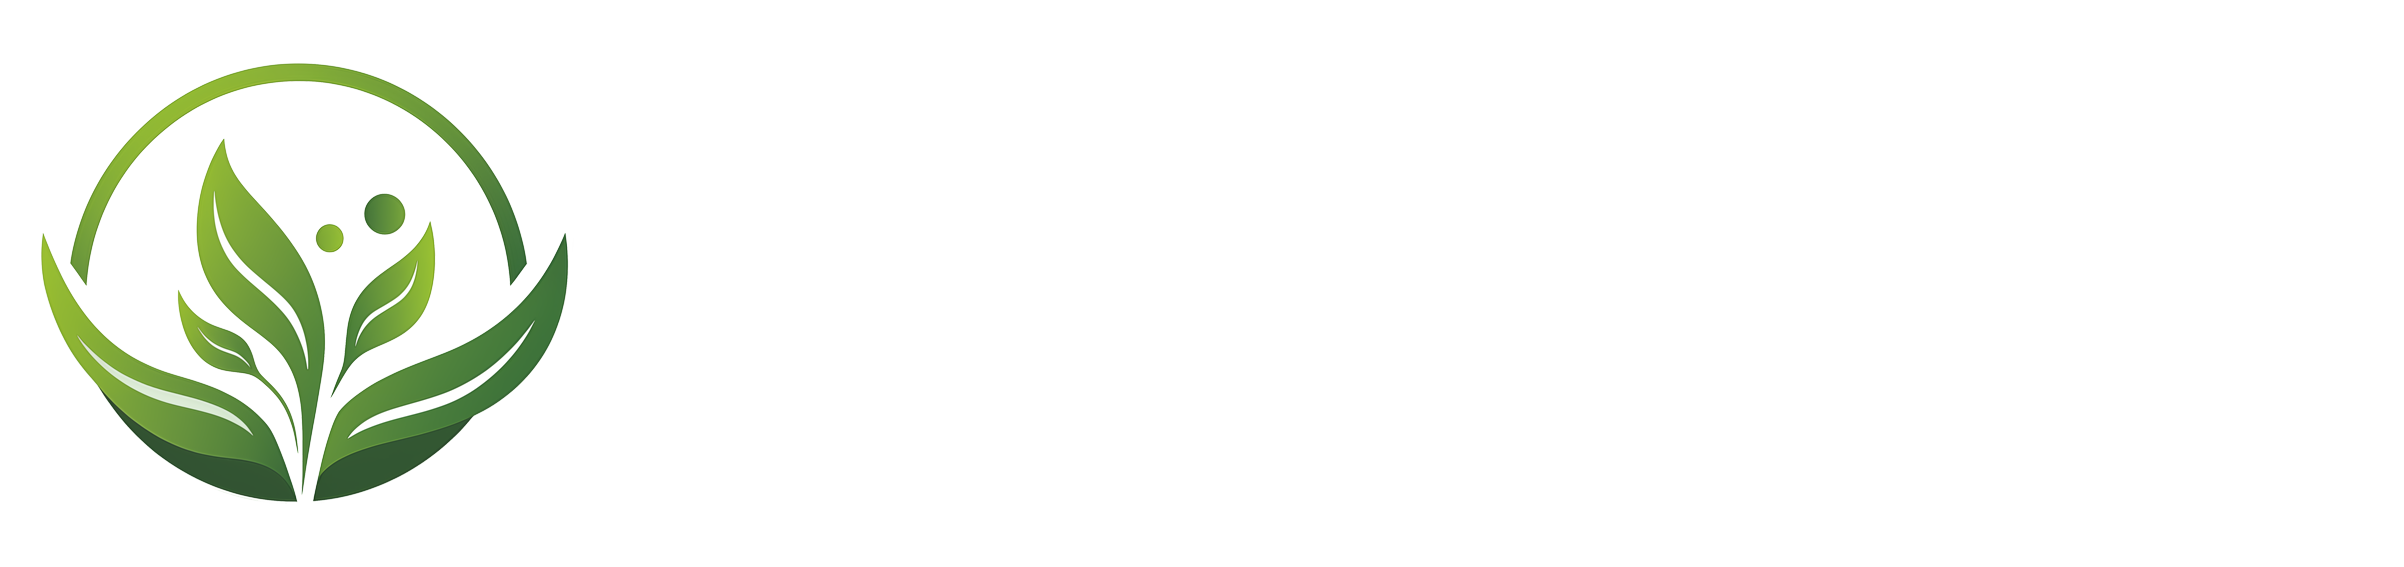 FISIQA logo